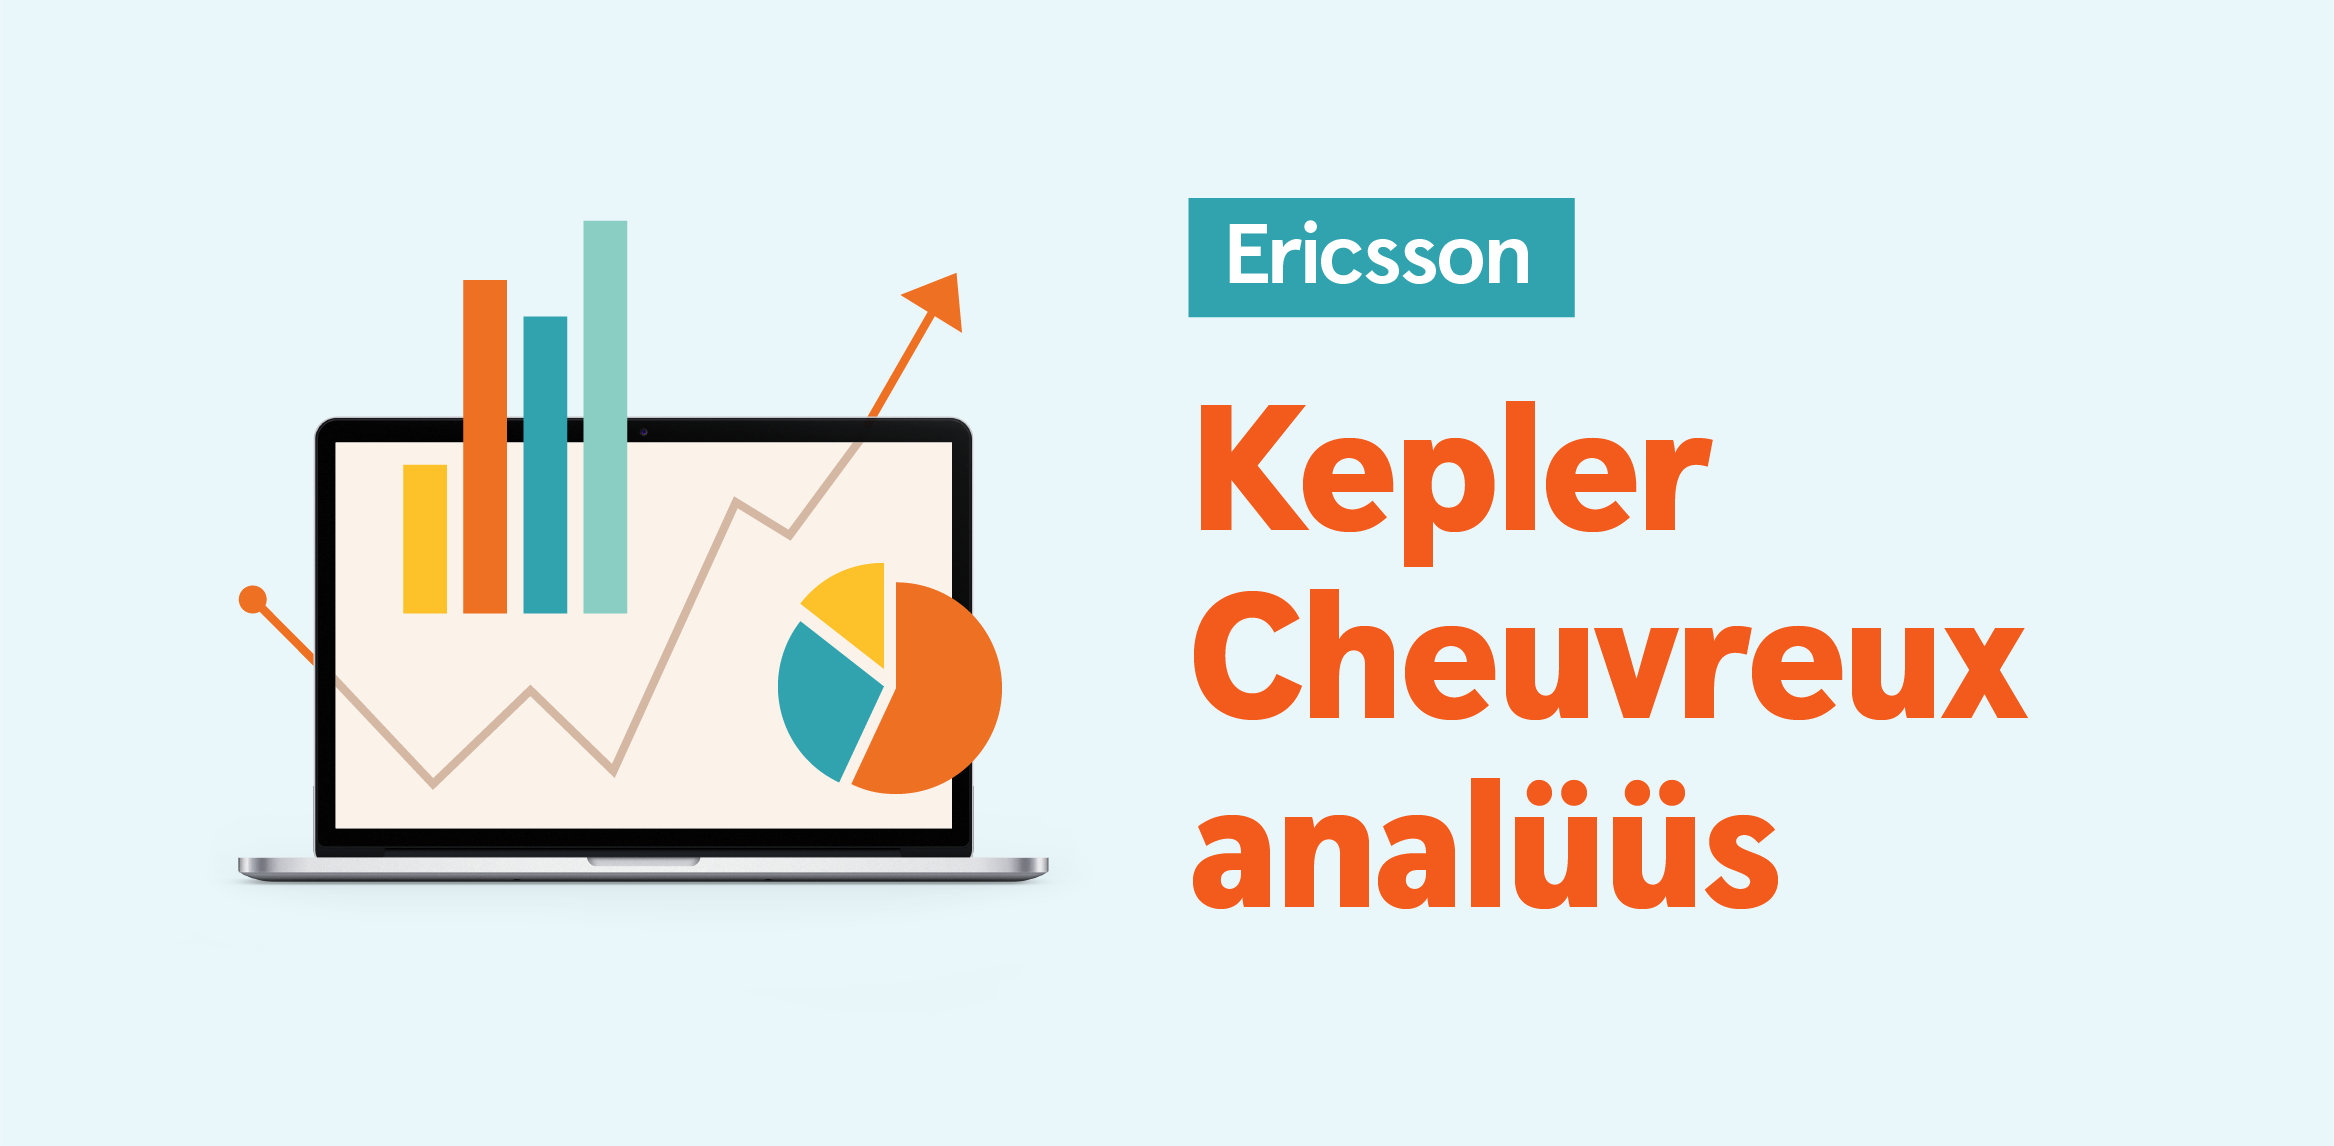 Kepler Cheuvrex повысил целевую цену акций Ericsson